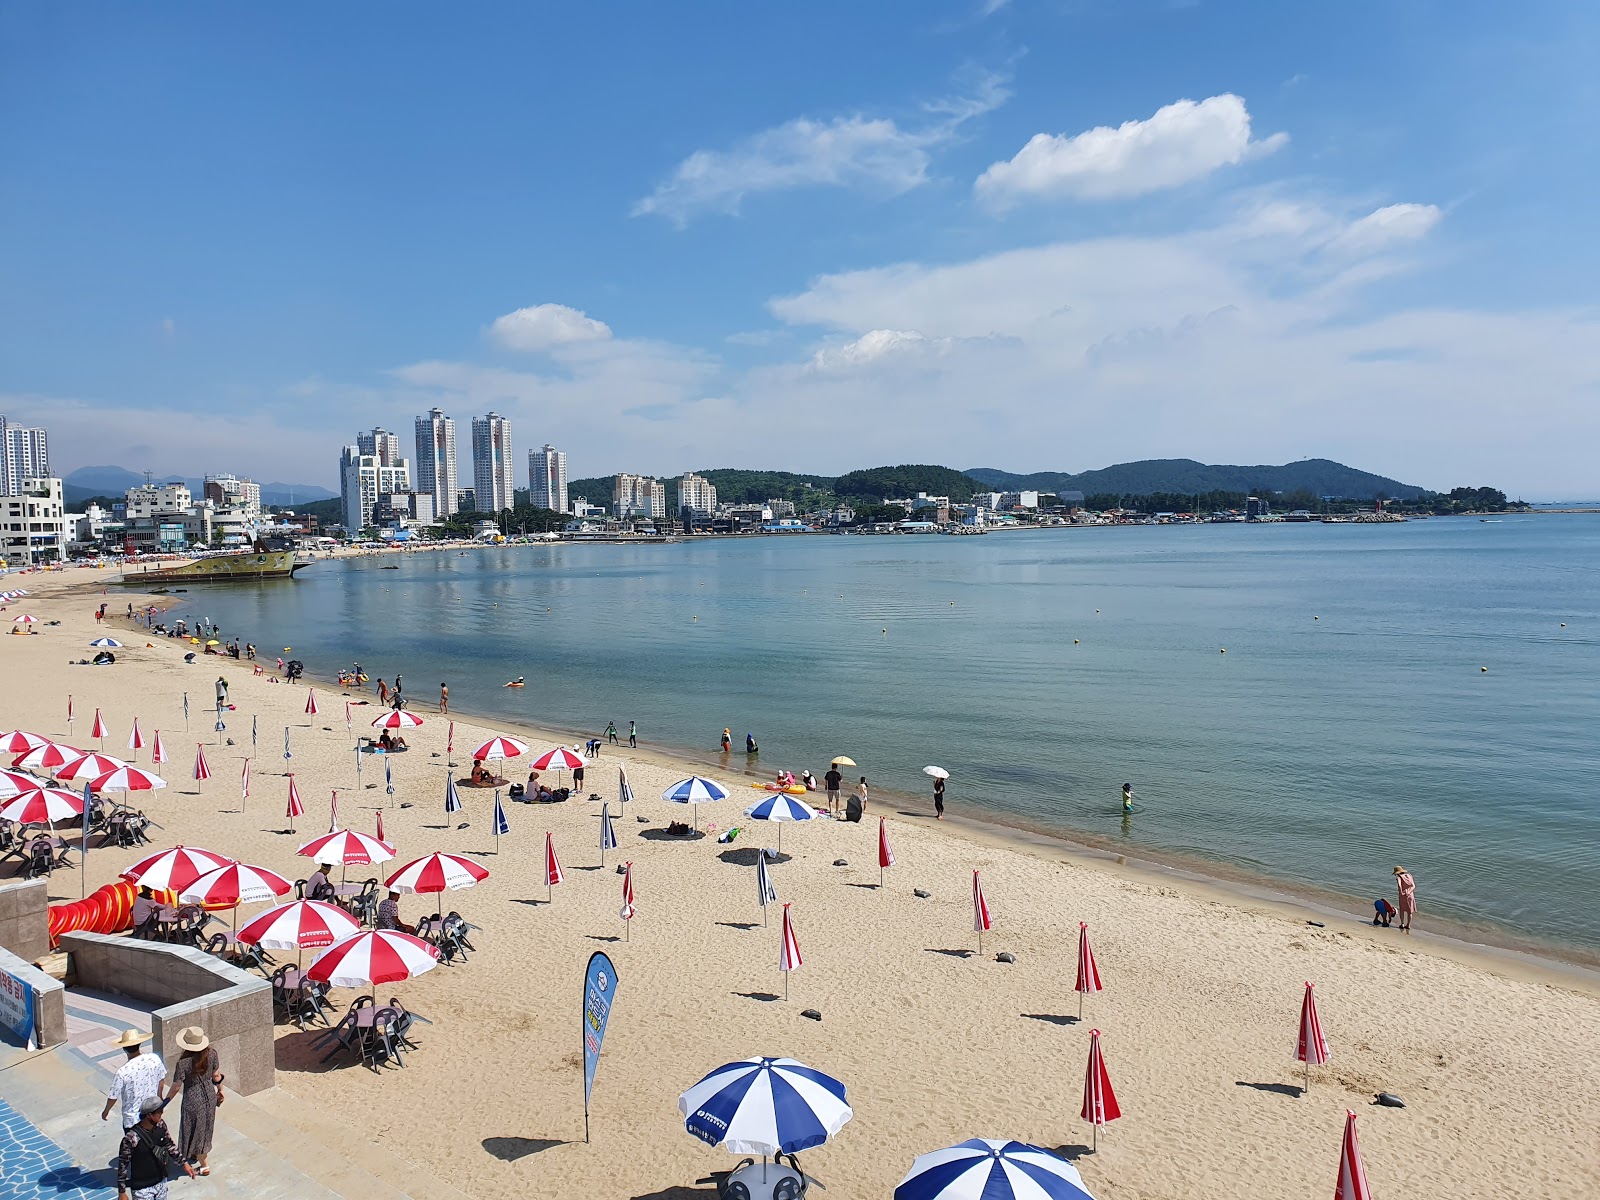 Ilgwang海滩的照片 带有宽敞的海湾